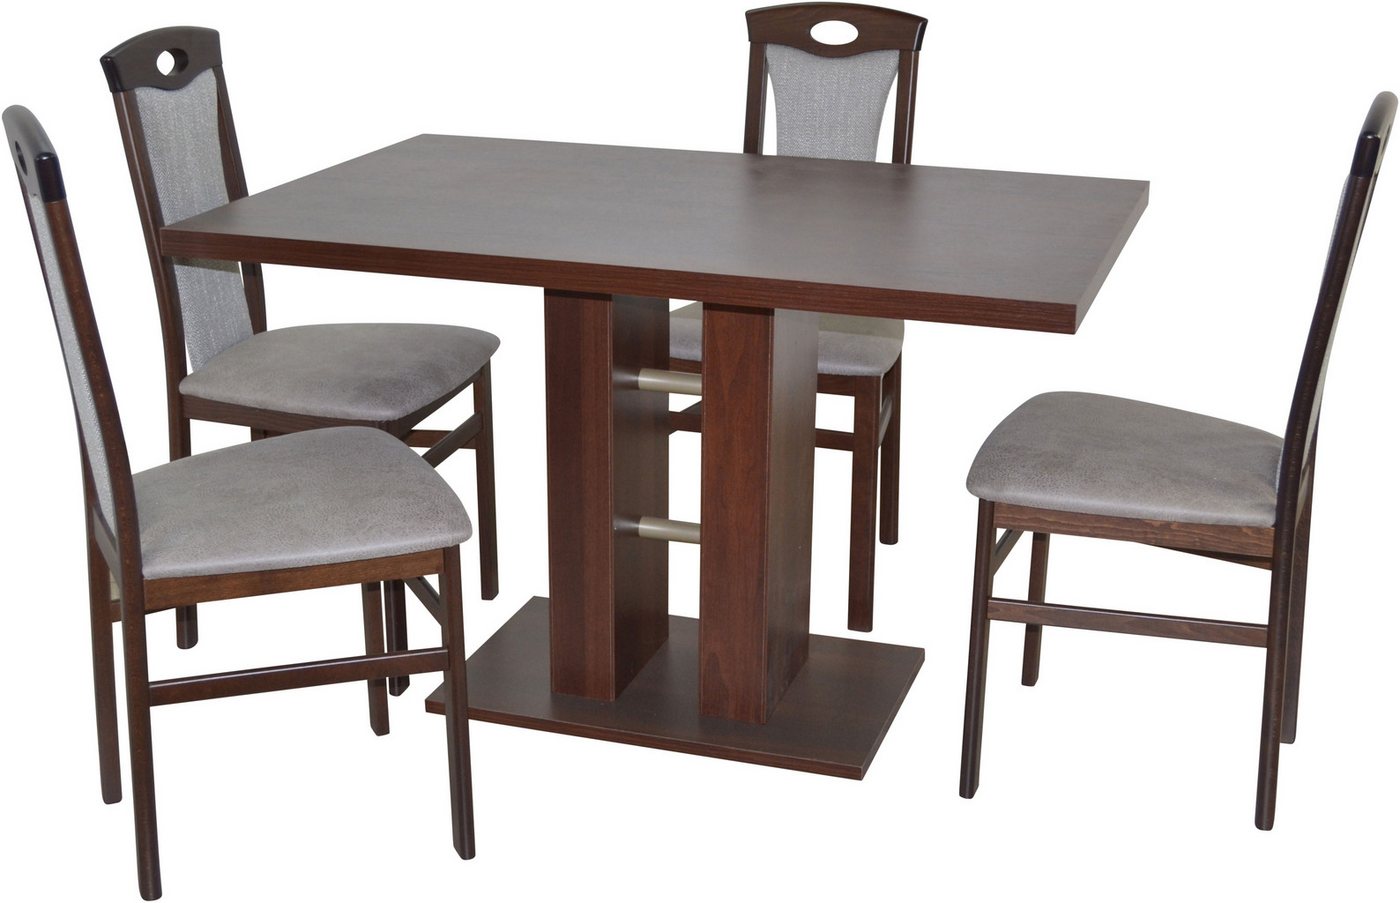 HOFMANN LIVING AND MORE Essgruppe 5tlg. Tischgruppe, (Spar-Set, 5-tlg., 5tlg. Tischgruppe), Stühle montiert von HOFMANN LIVING AND MORE